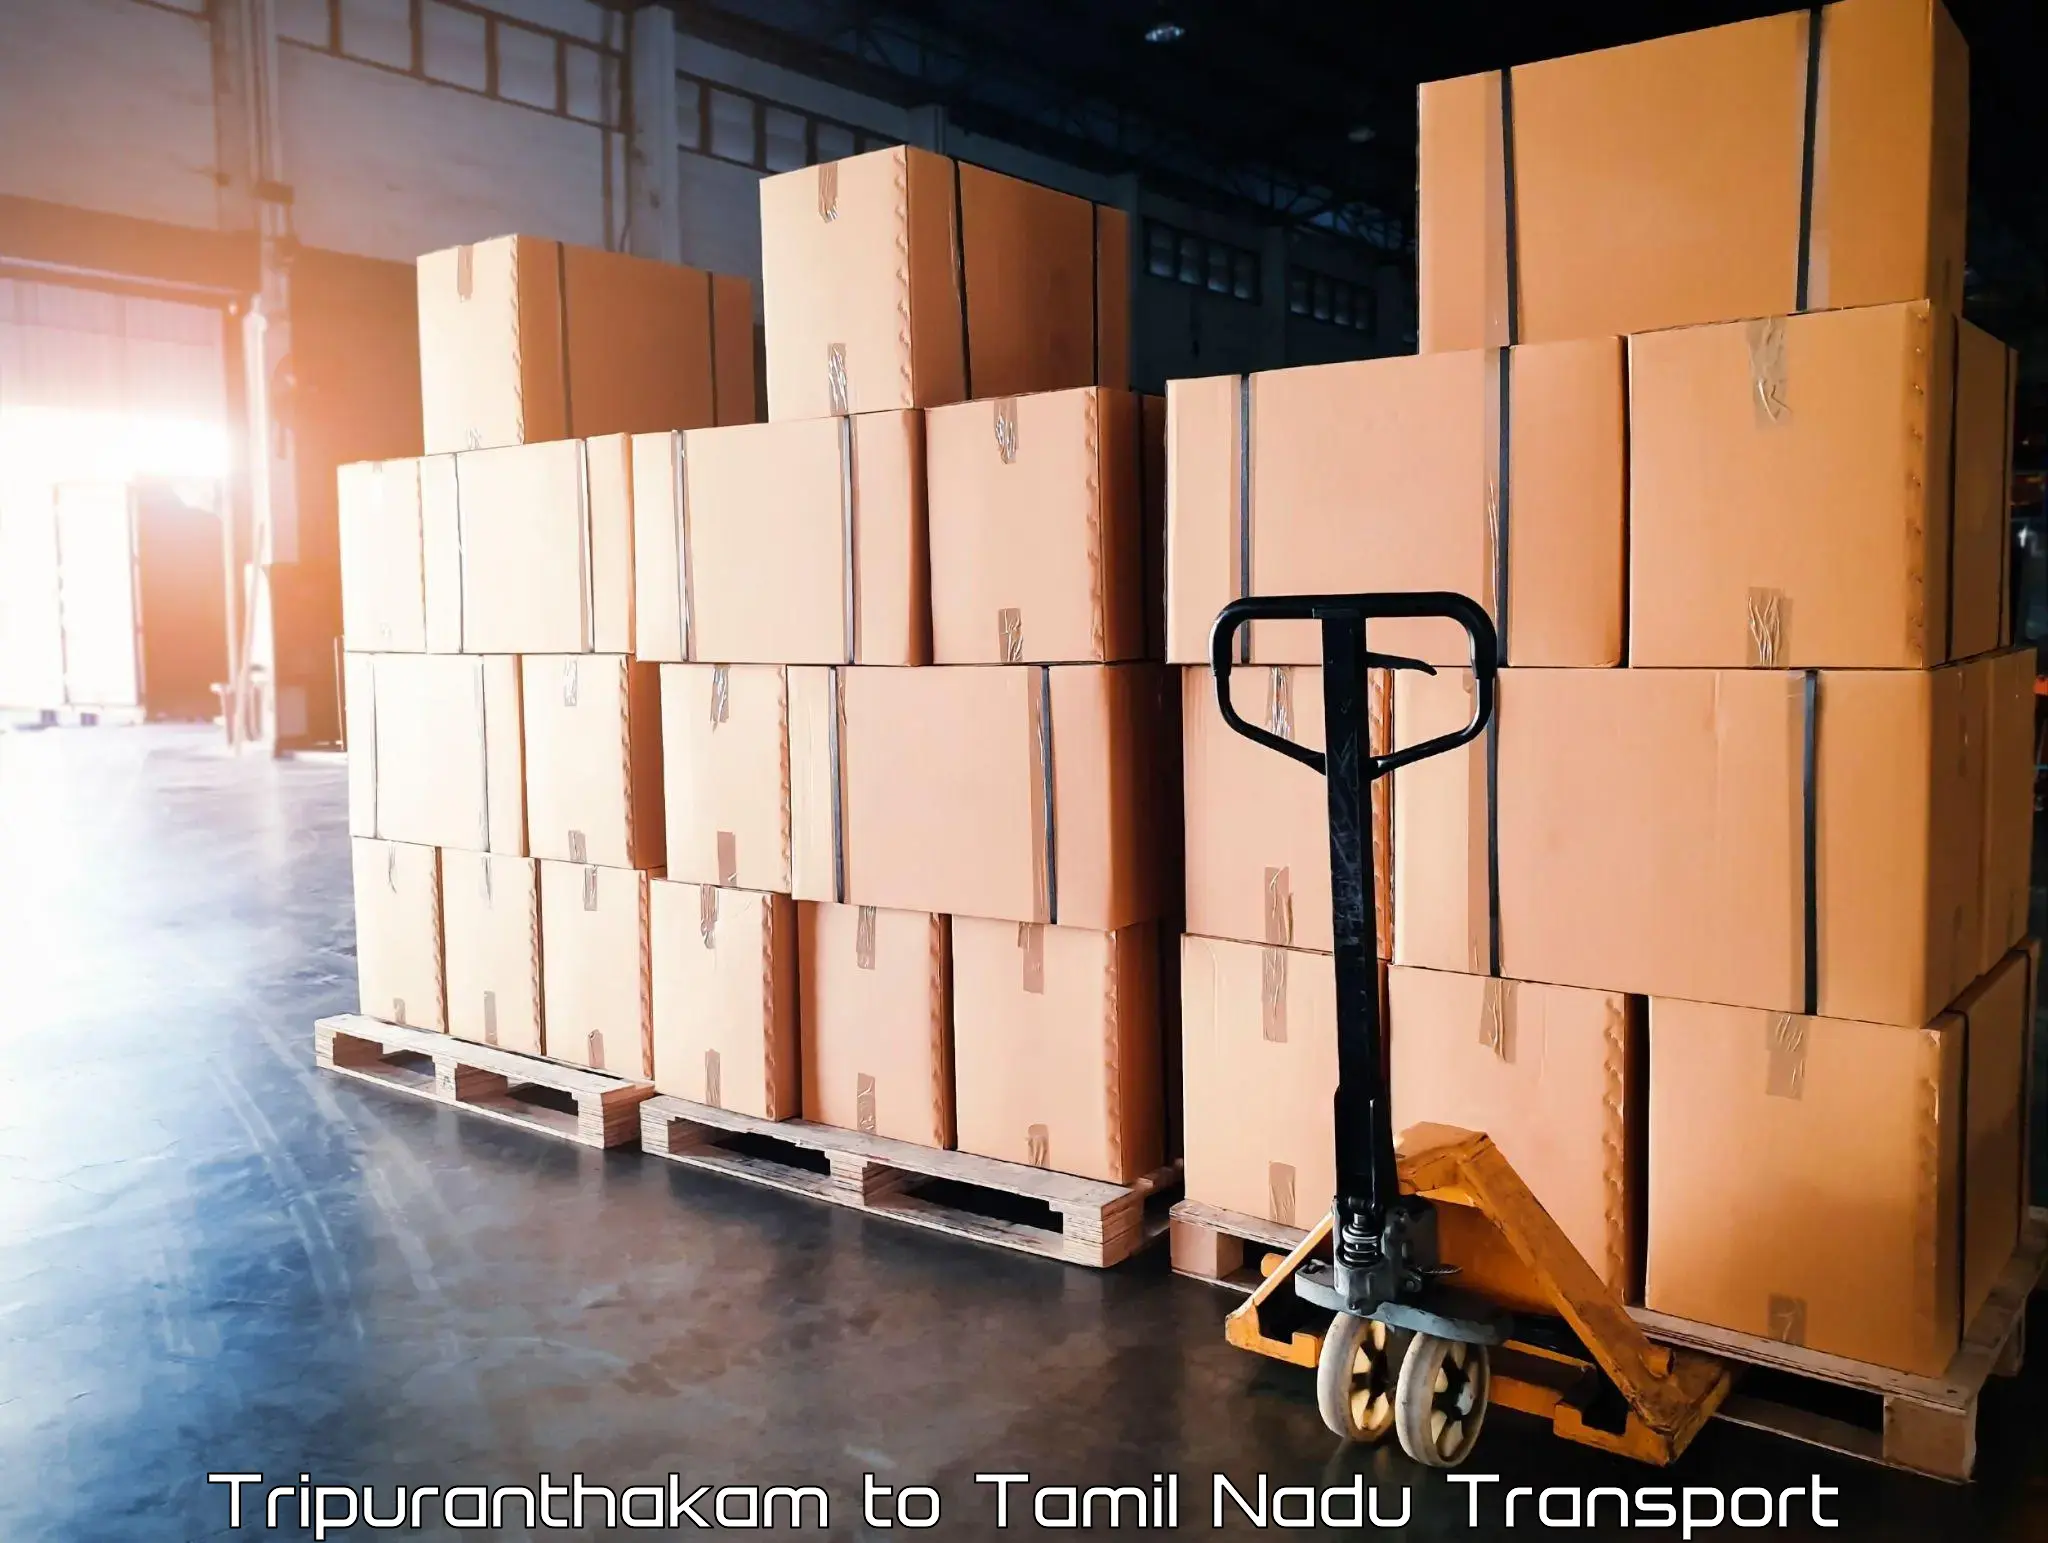 Transport in sharing in Tripuranthakam to Thisayanvilai